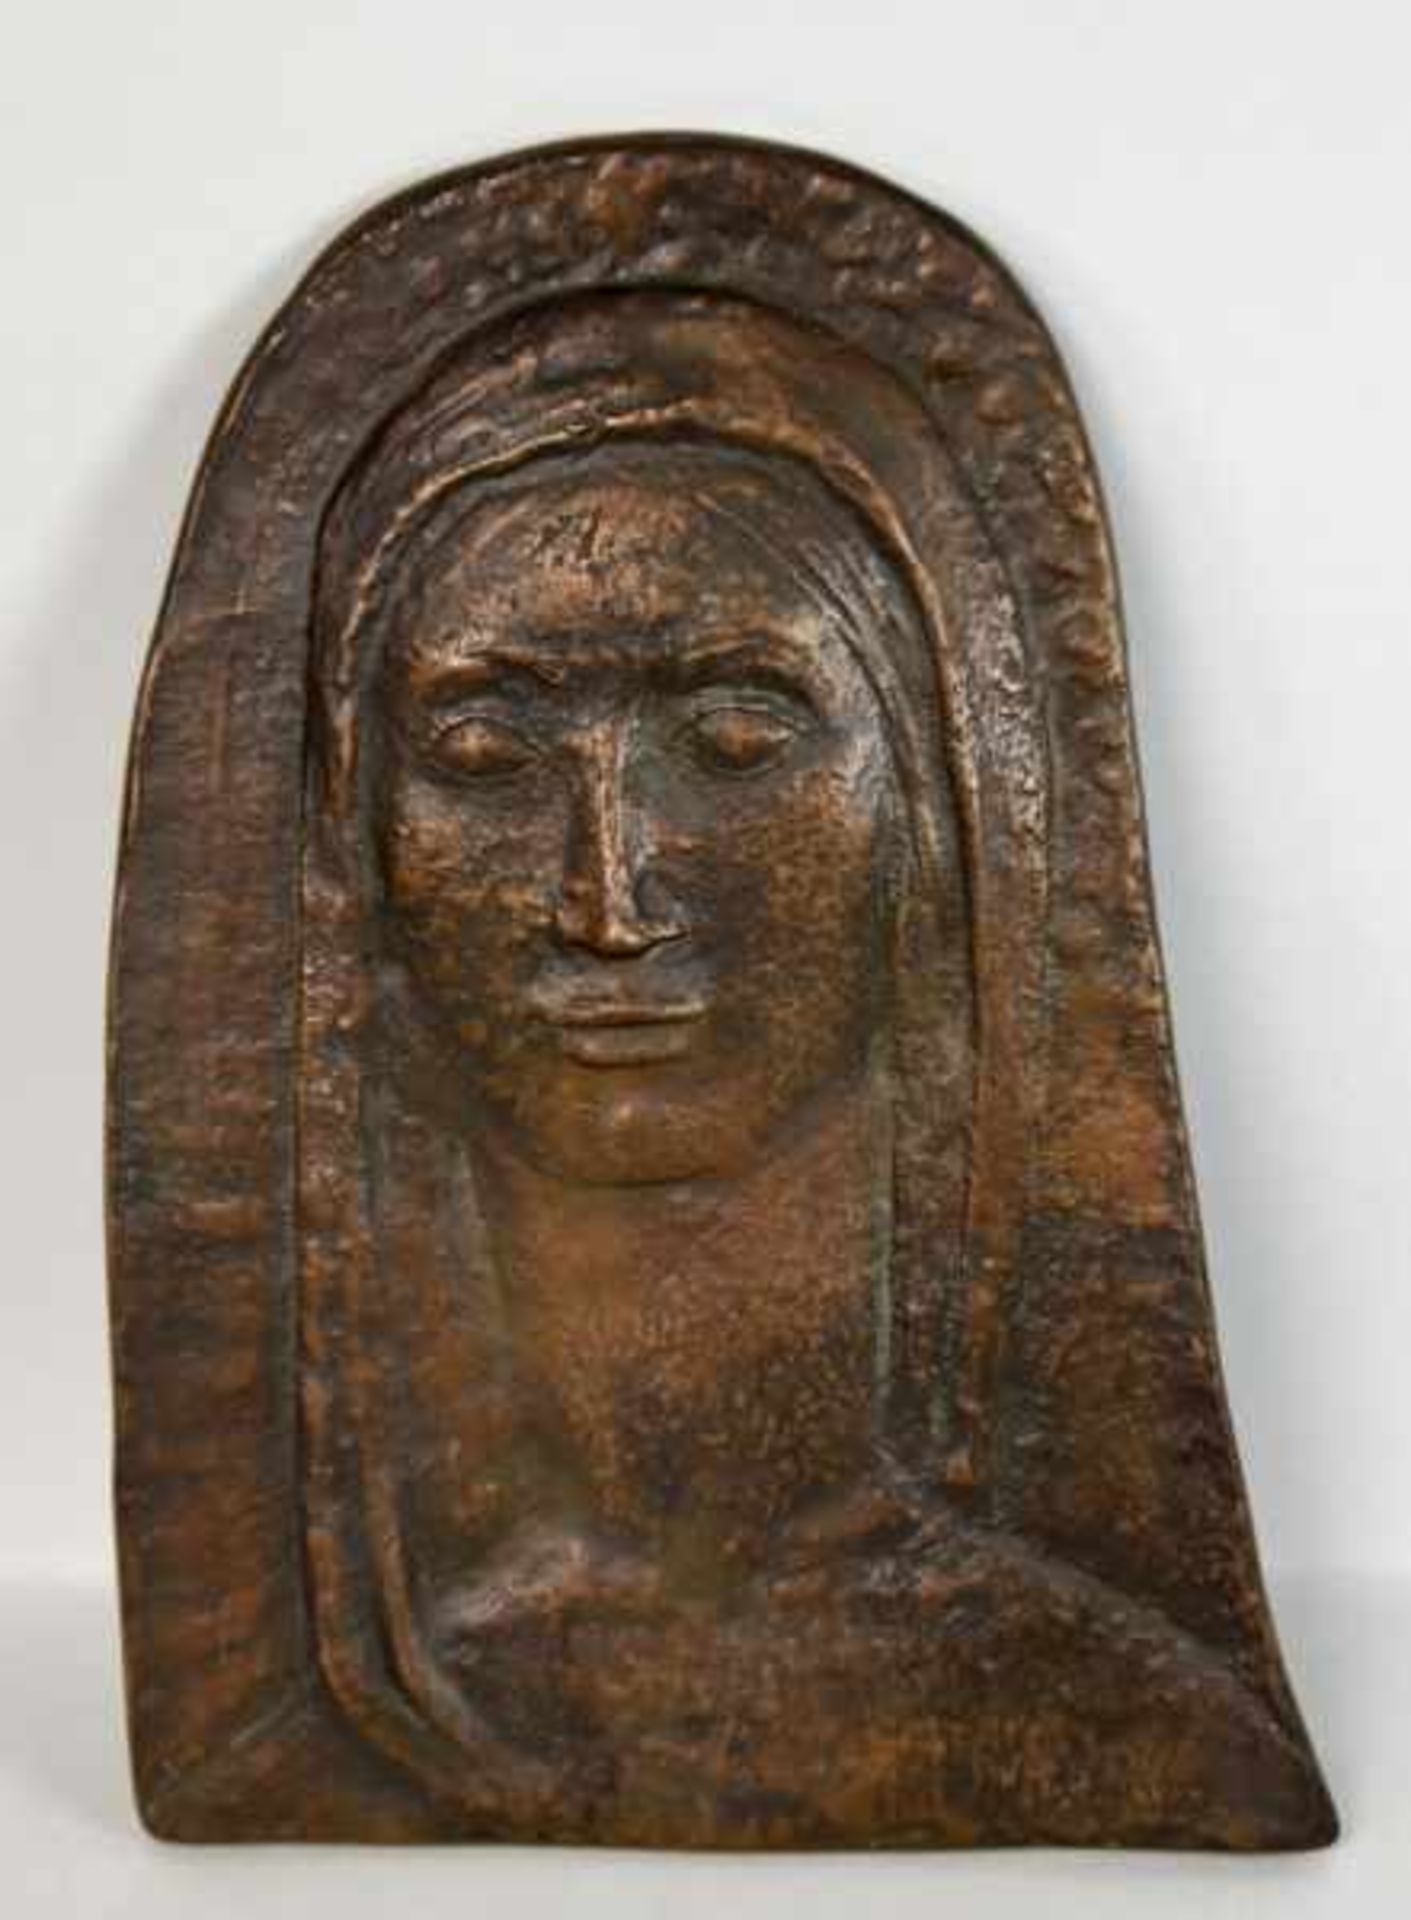 KIESSLING H. "Fraueportrait" Gesicht mit langen Haaren, Wandplatte mit Relief, gebogter oberer